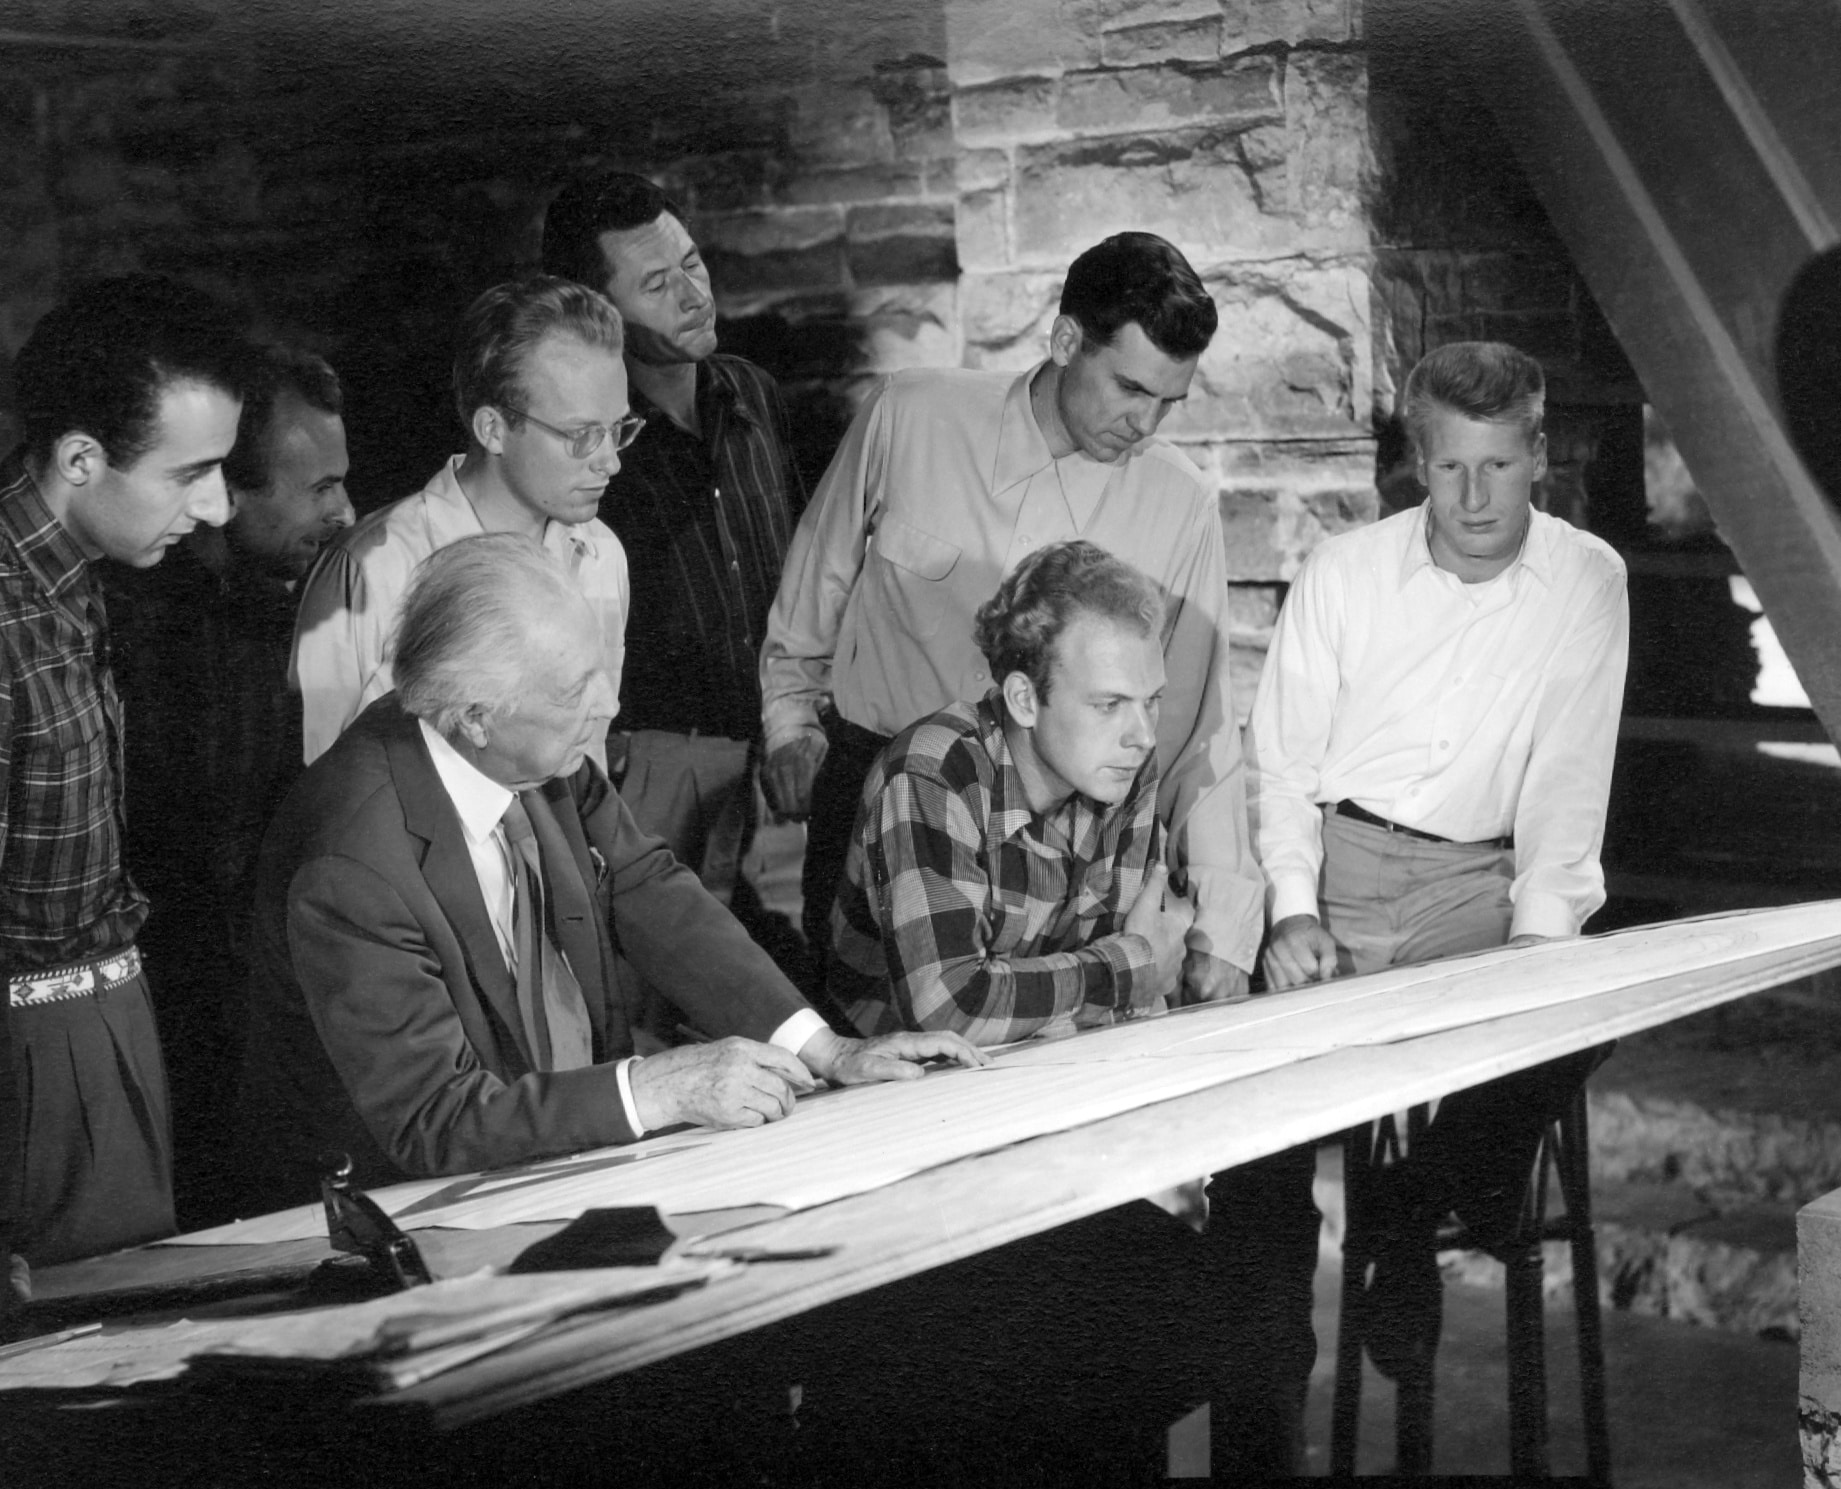 Frank Lloyd Wright with apprentices of the Taliesin Fellowship in 1955 at the Hillside studio at Taliesin.Seated from left: Frank Lloyd Wright, Eric Lloyd Wright. Standing from left: John Amarantides, Joe Fabris, David Dodge, Kenn Lockhart, Tom Casey, Donald Brown.